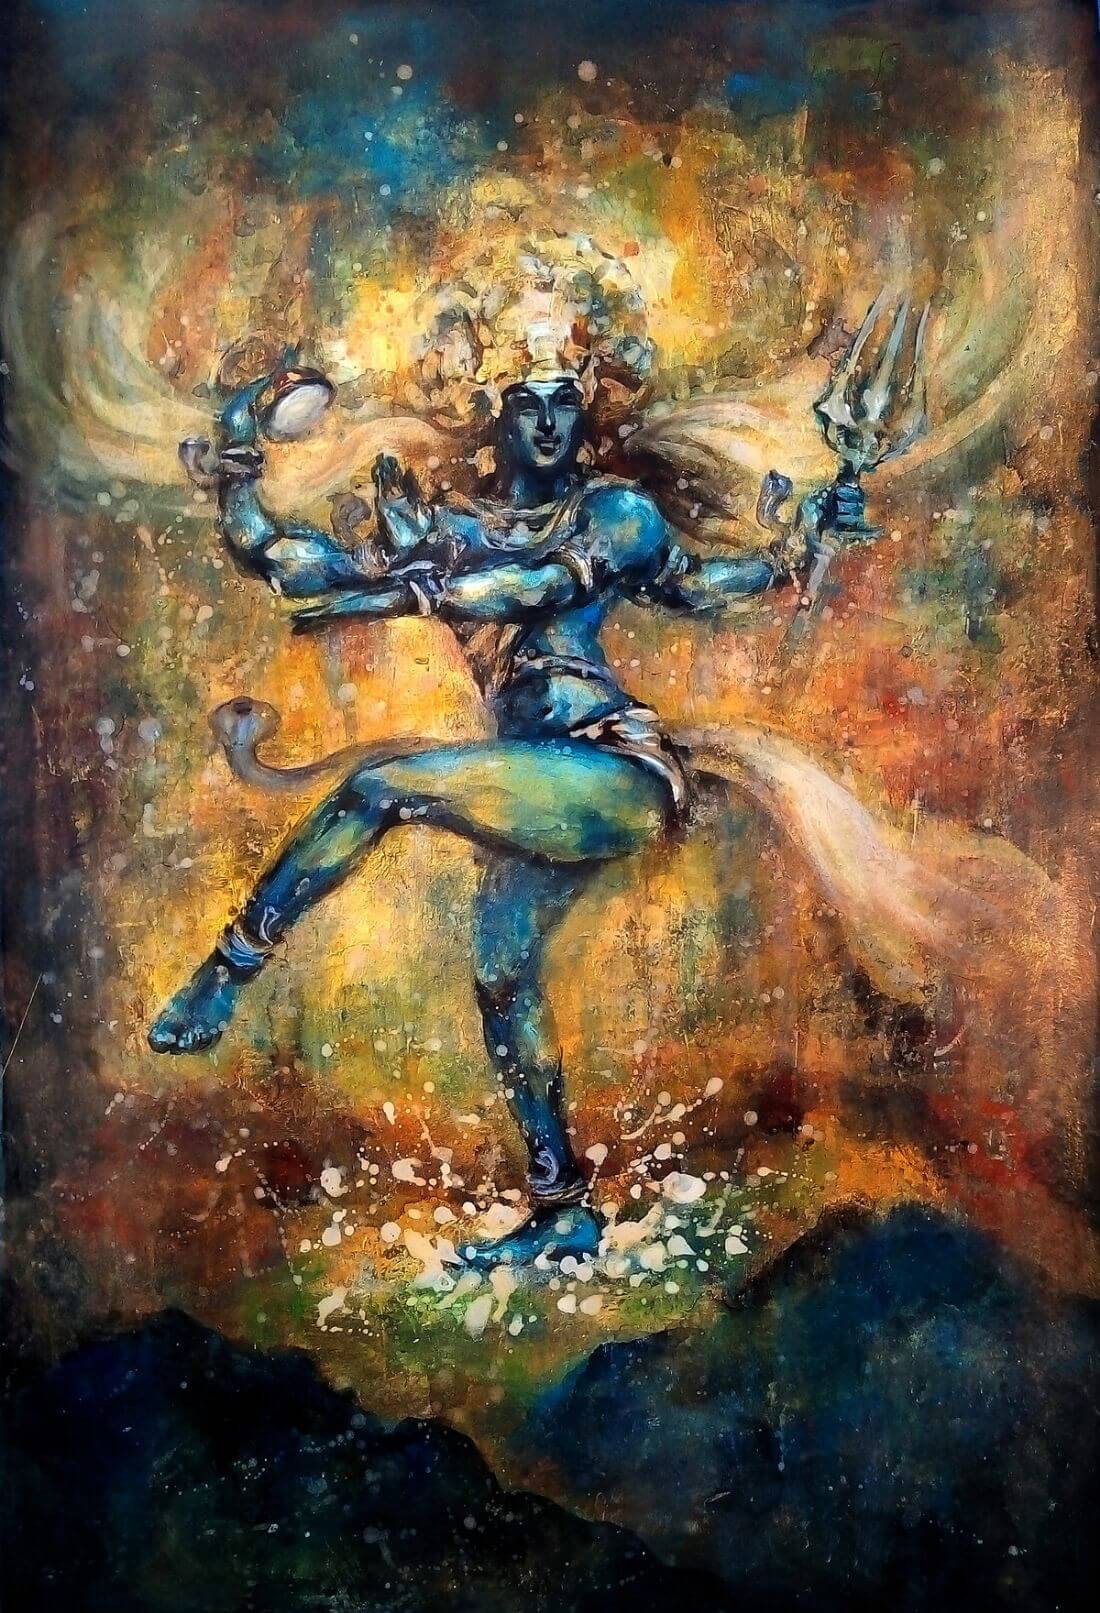 Ritwikas Digital Reprint Shiva Abstract Art Painting MatteTextured -Lord  Shiva : Amazon.com.au: Home